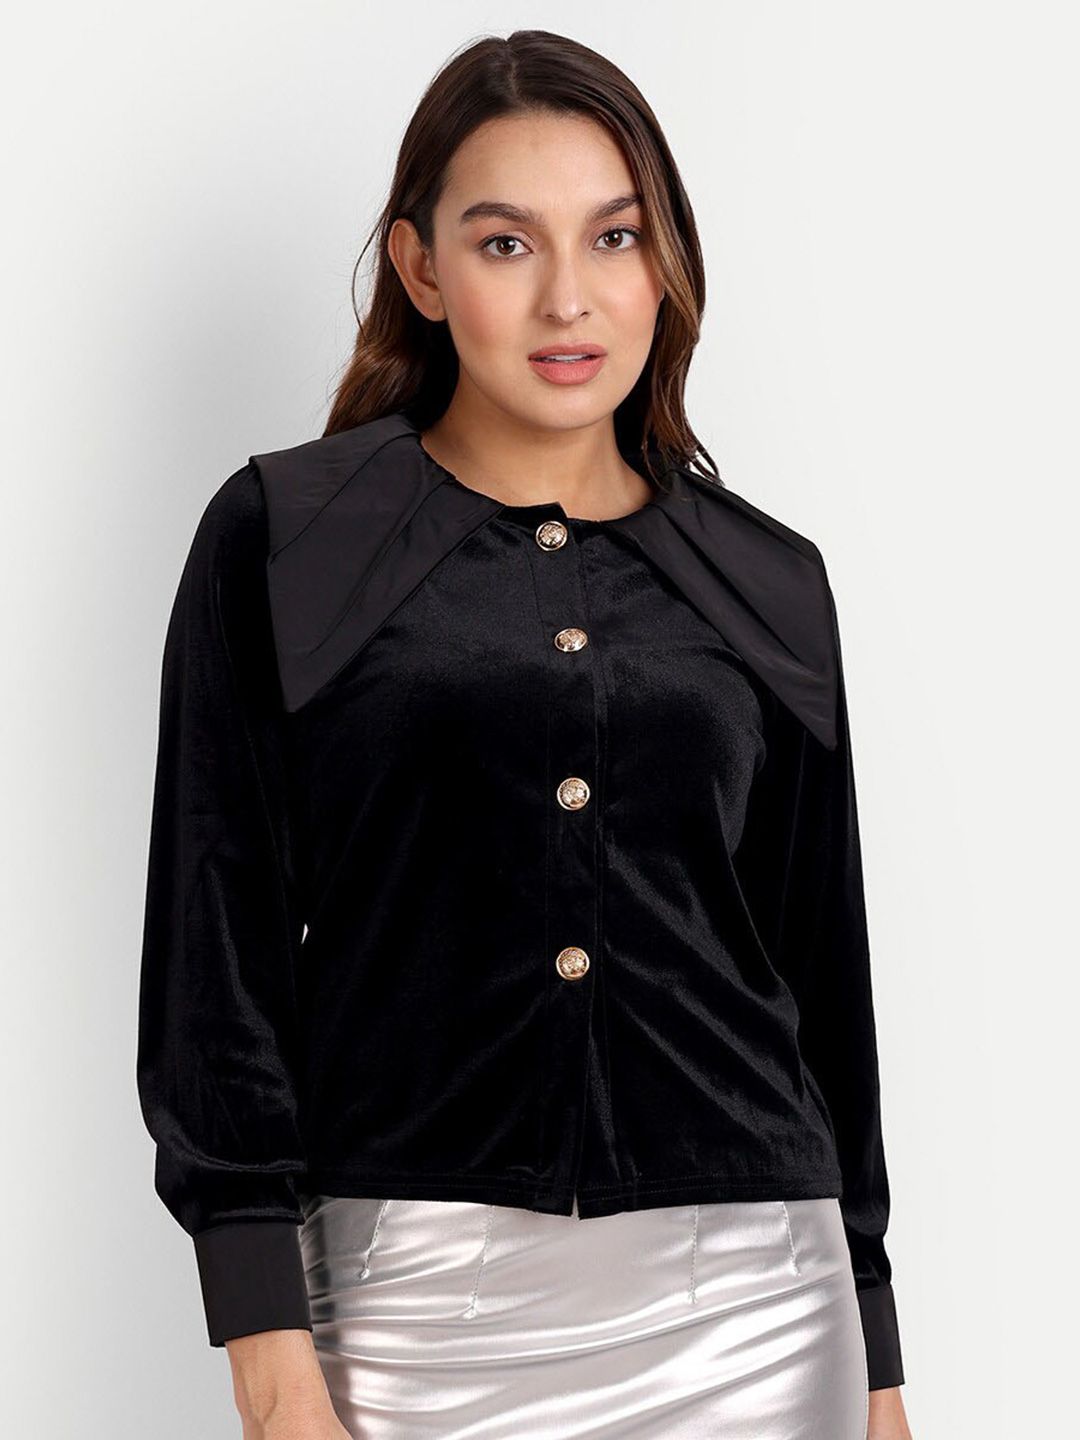 iki chic Black Studded Velvet Satin Collar & Cuffs Shirt Style Top Price in India